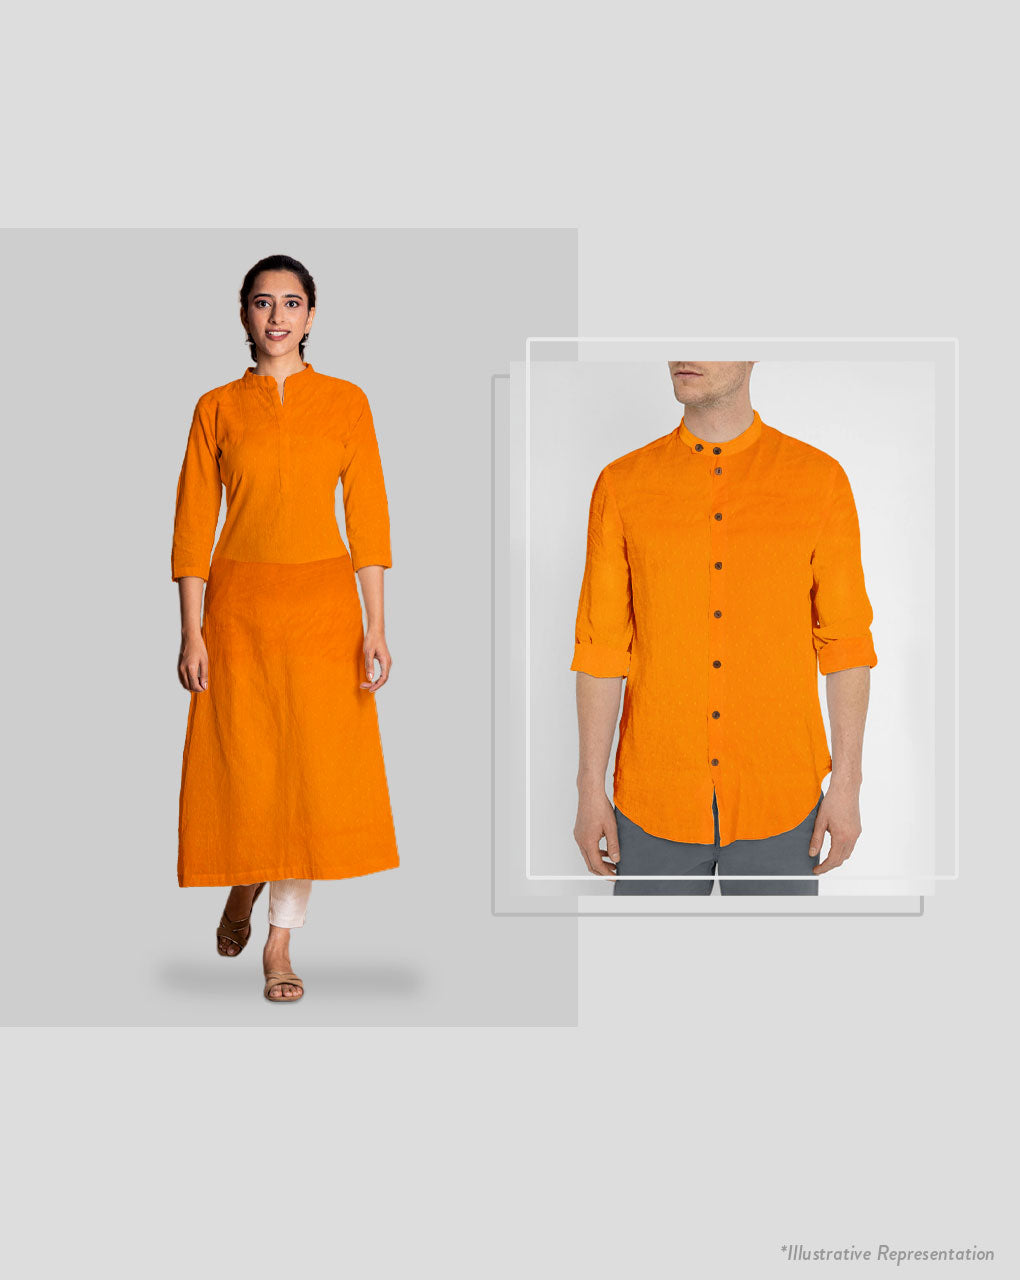 ( Pre Cut 1.25 MTR ) Orange Jacquard Cotton Fabric